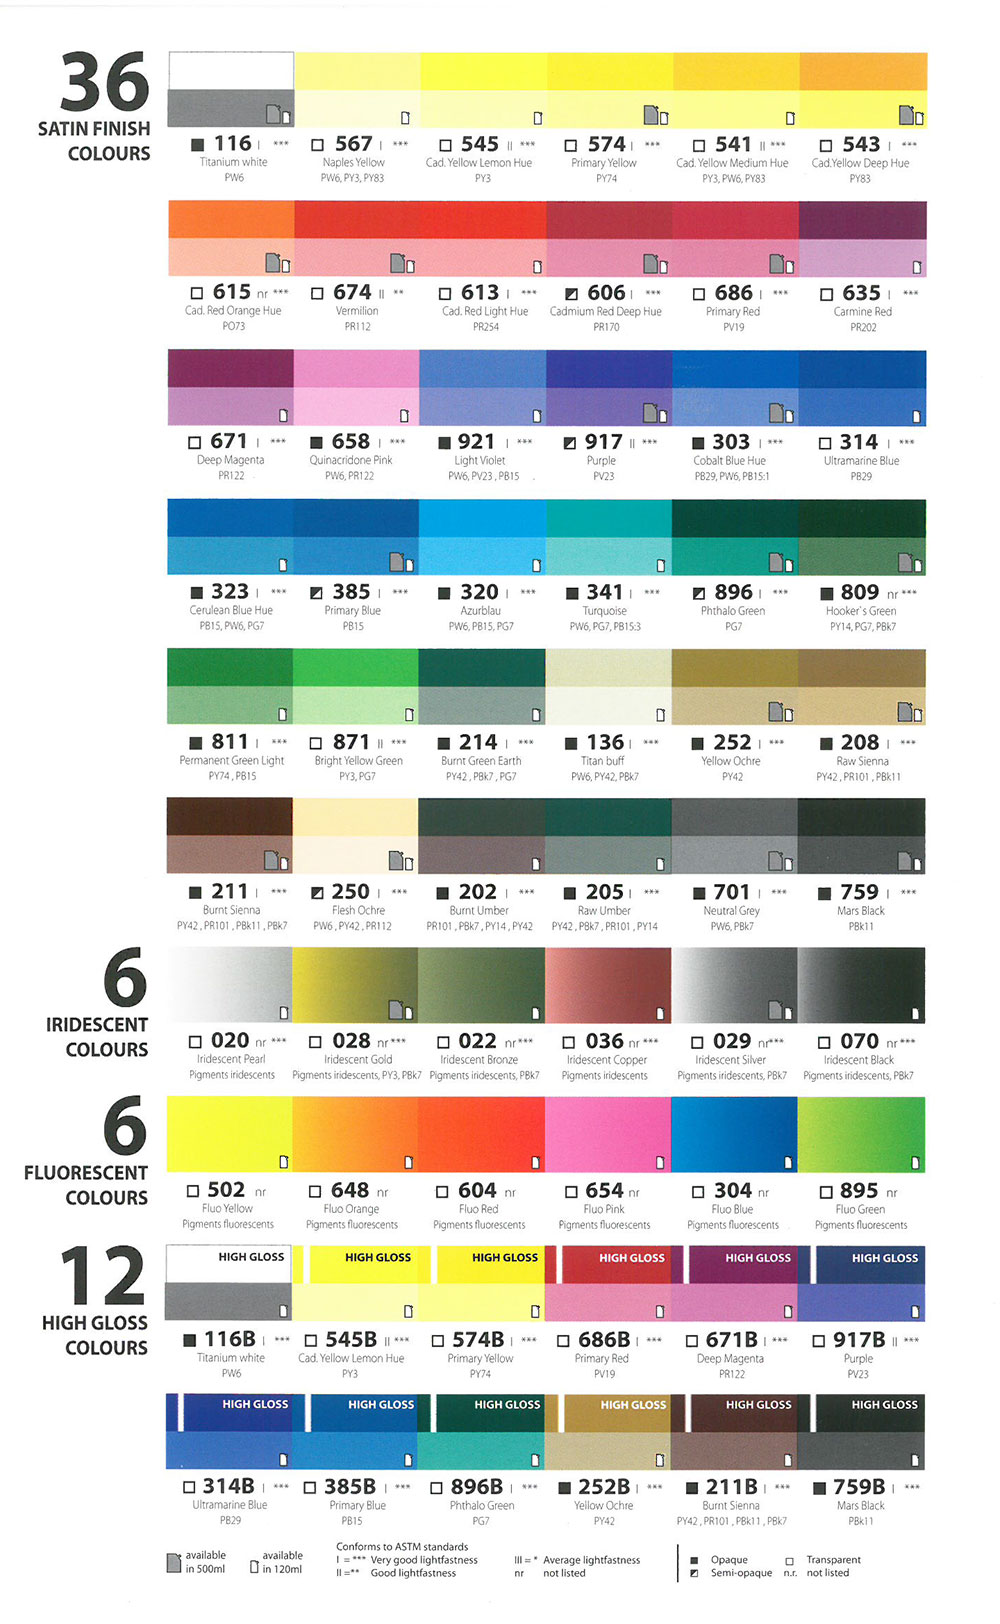 Sennelier Acrylic Color Chart